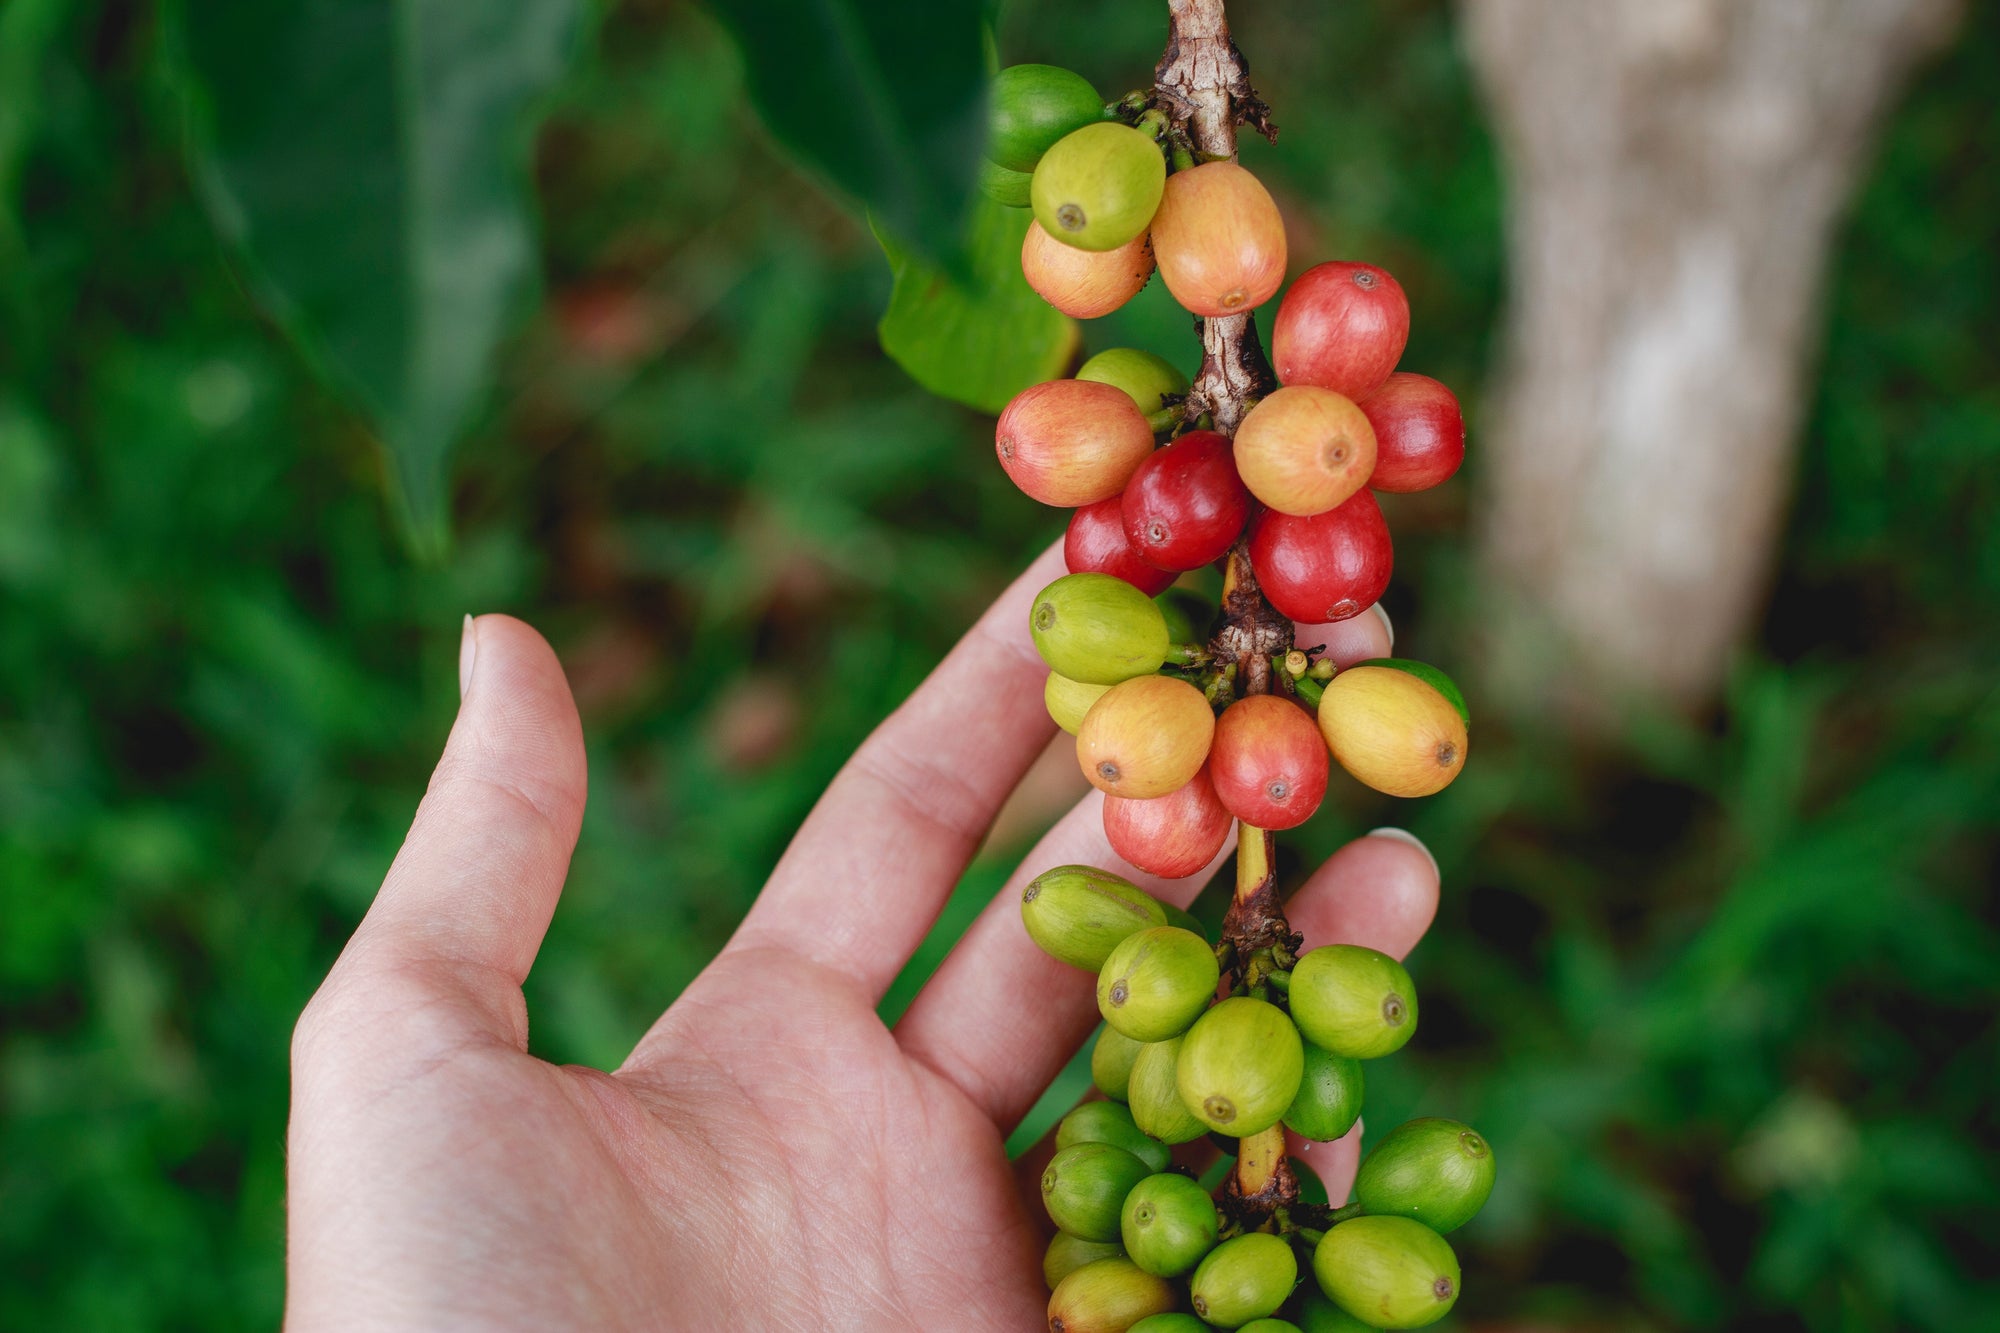 Kona Coffee Price Increase (For Good Reason)